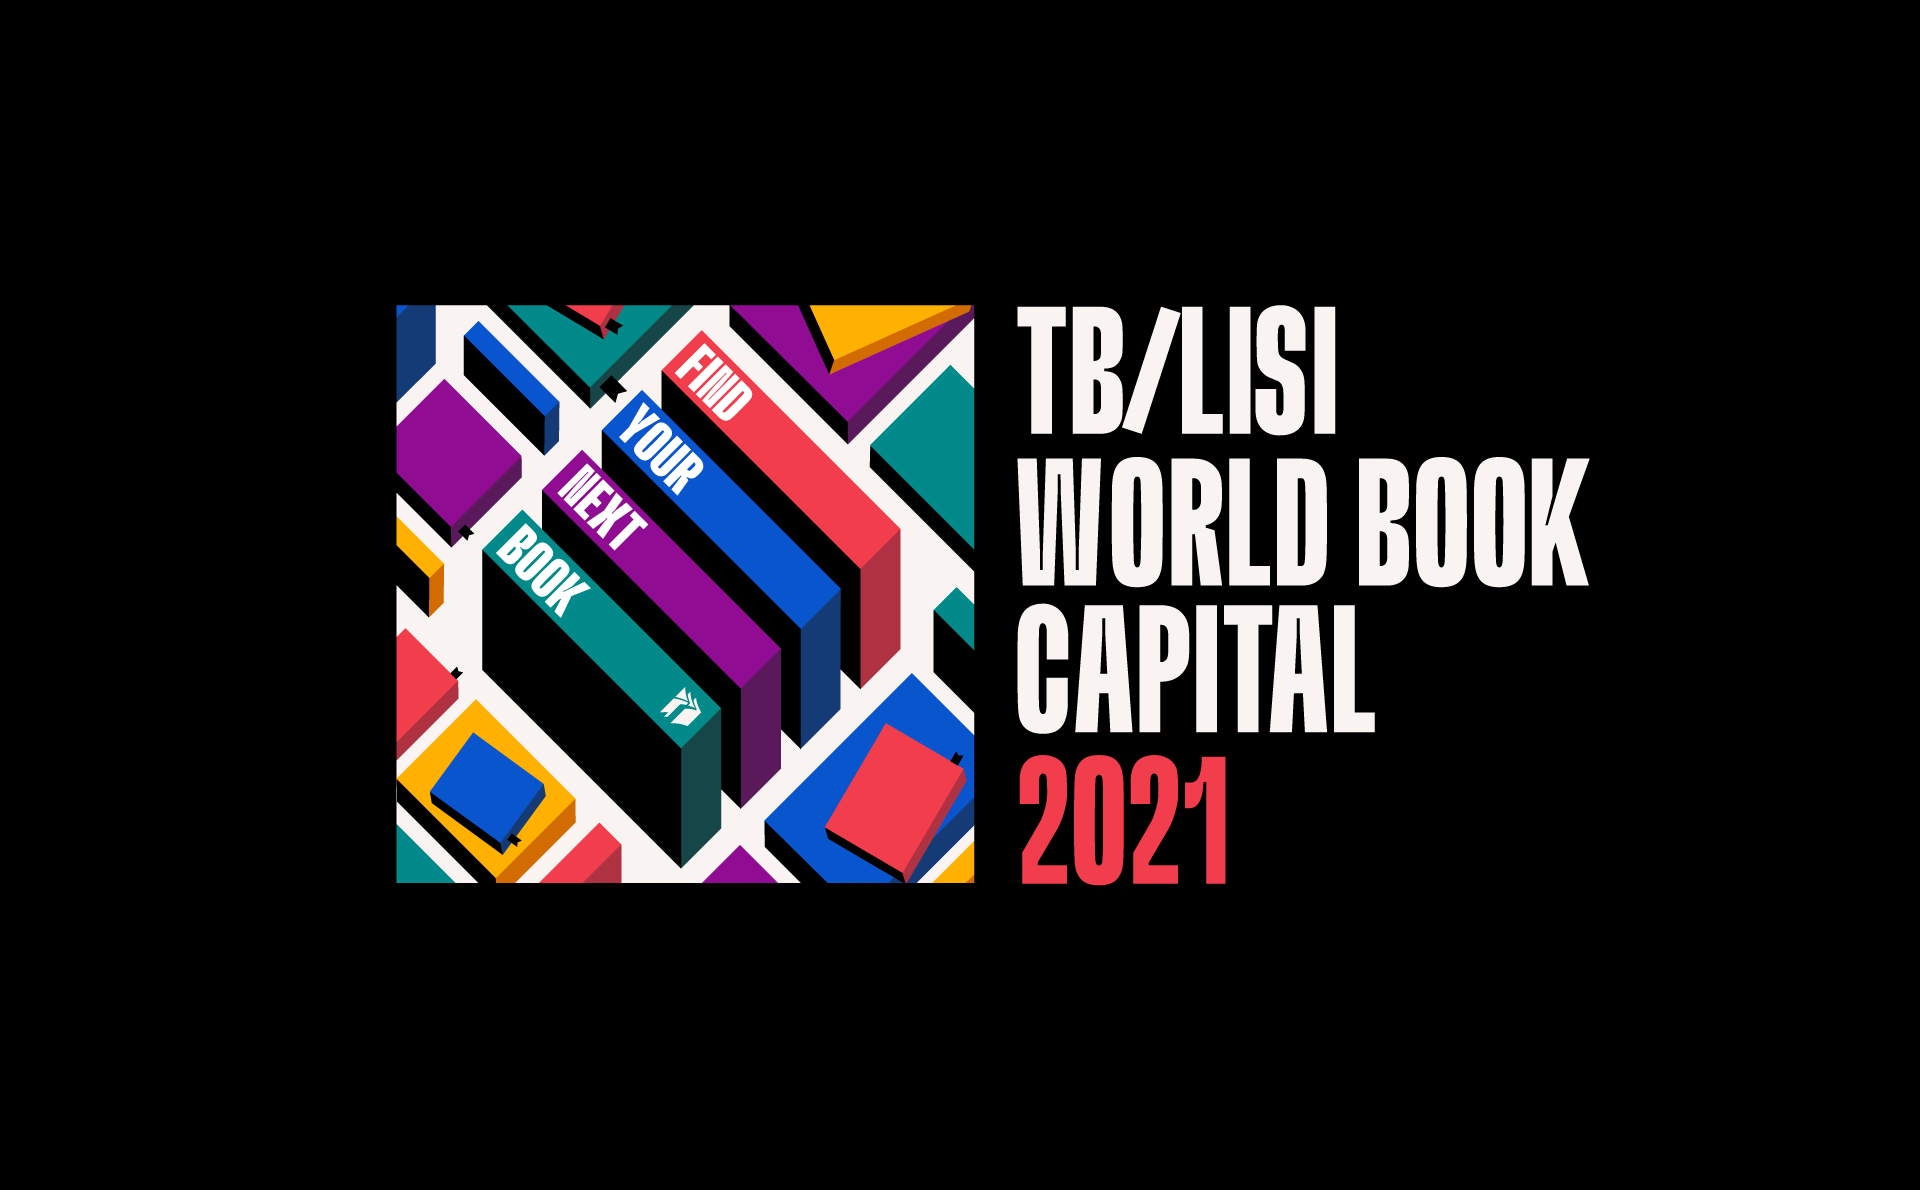 Tbilisi World Book Capital 2021